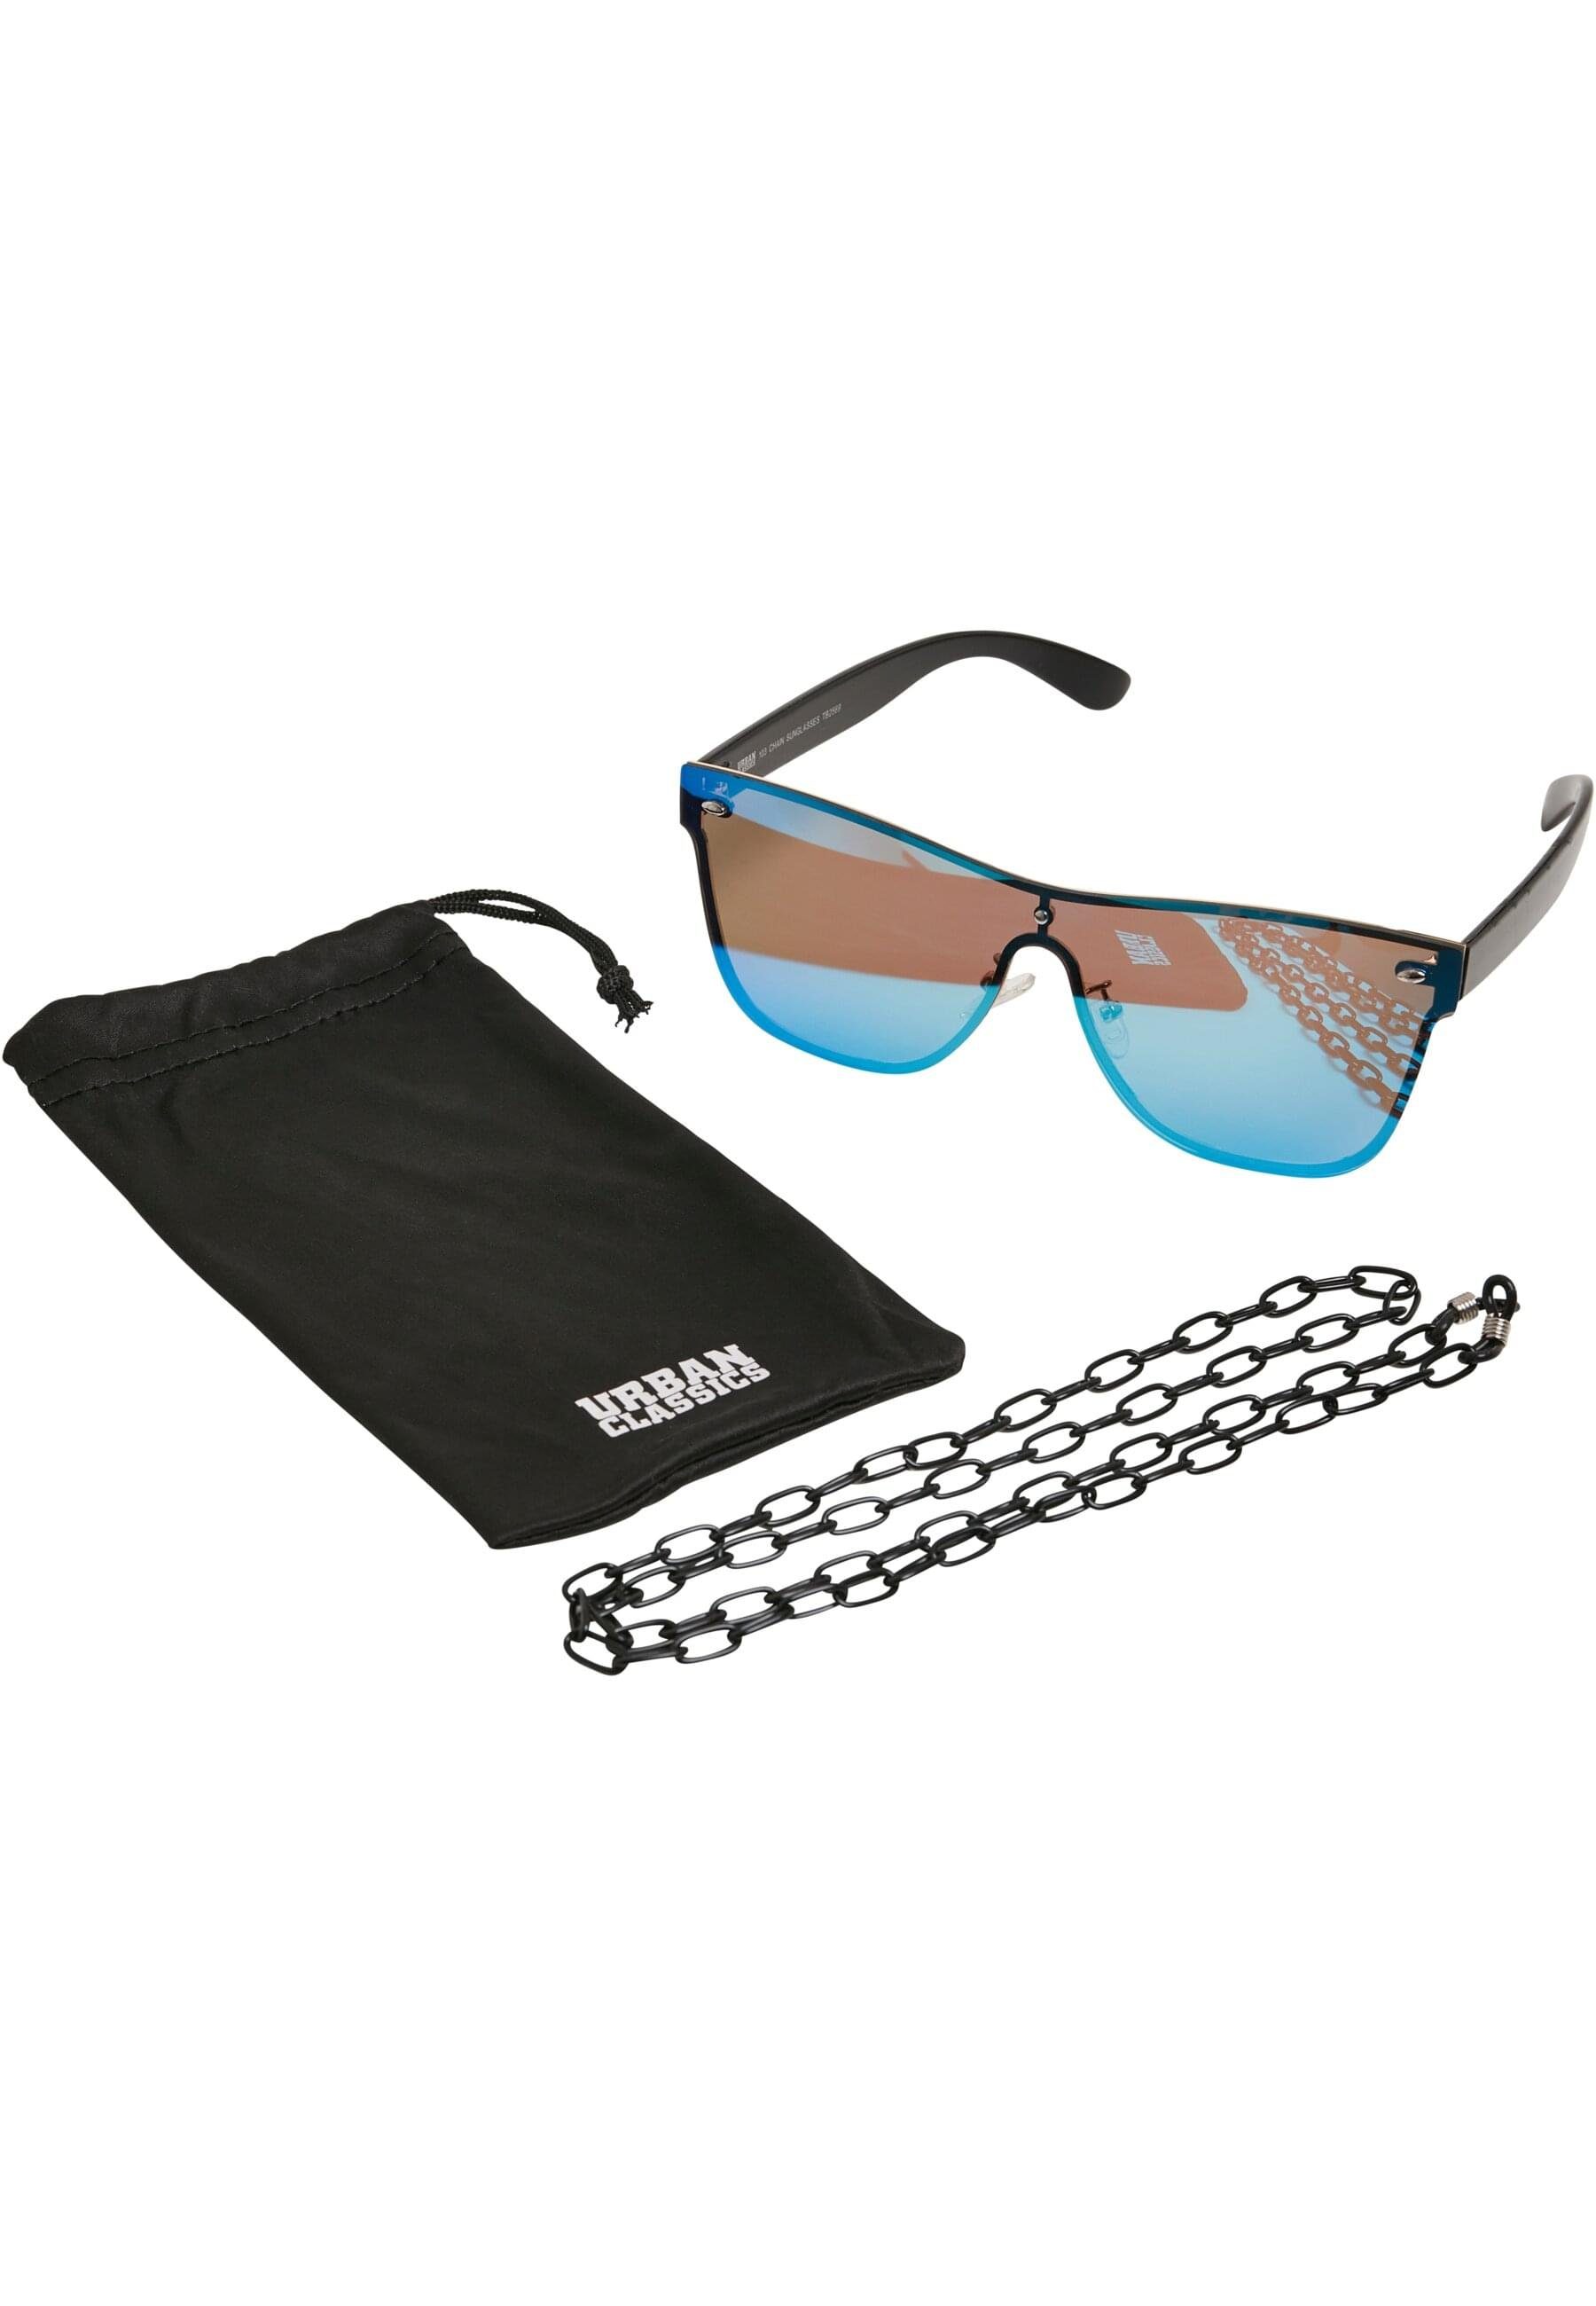 Sonnenbrille 103 blk/blue Sunglasses CLASSICS Unisex URBAN Chain